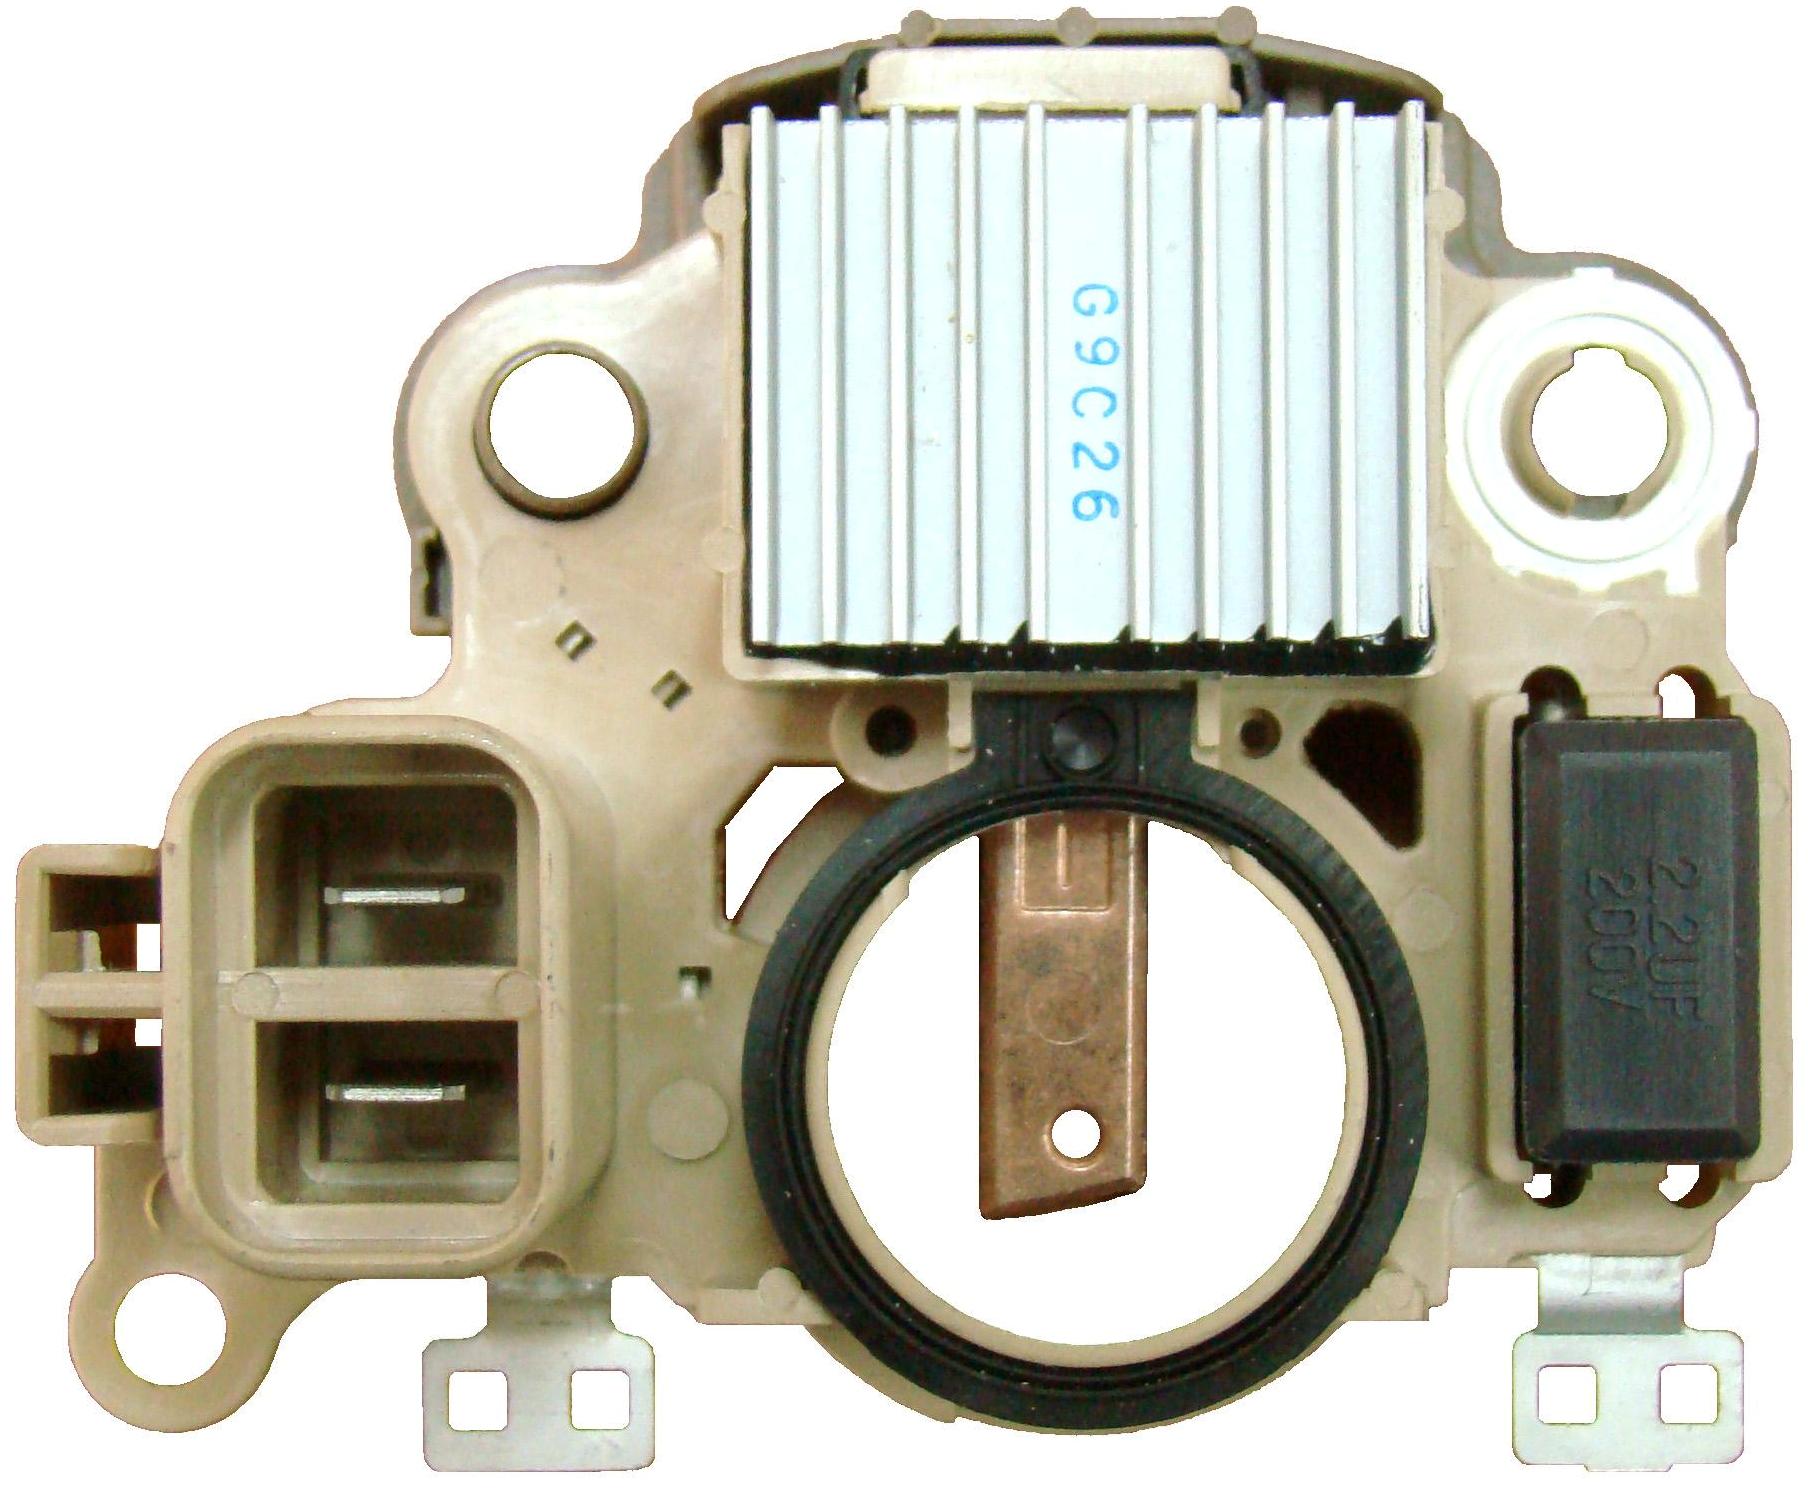 Voltage Regulator for Automobile(GNR-M013)  Made in Korea